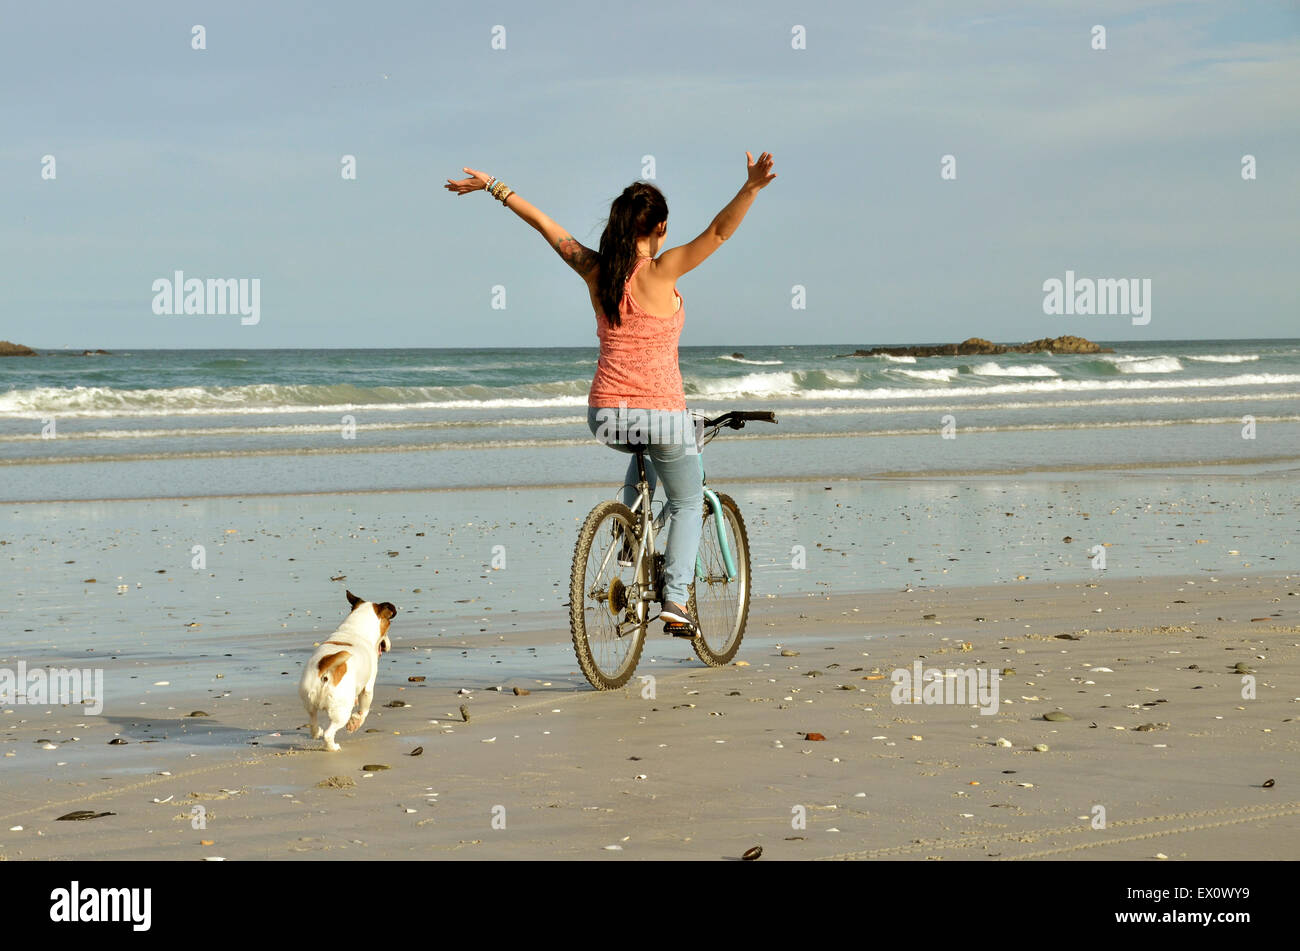 girl riding a bike on a beach Stock Photo